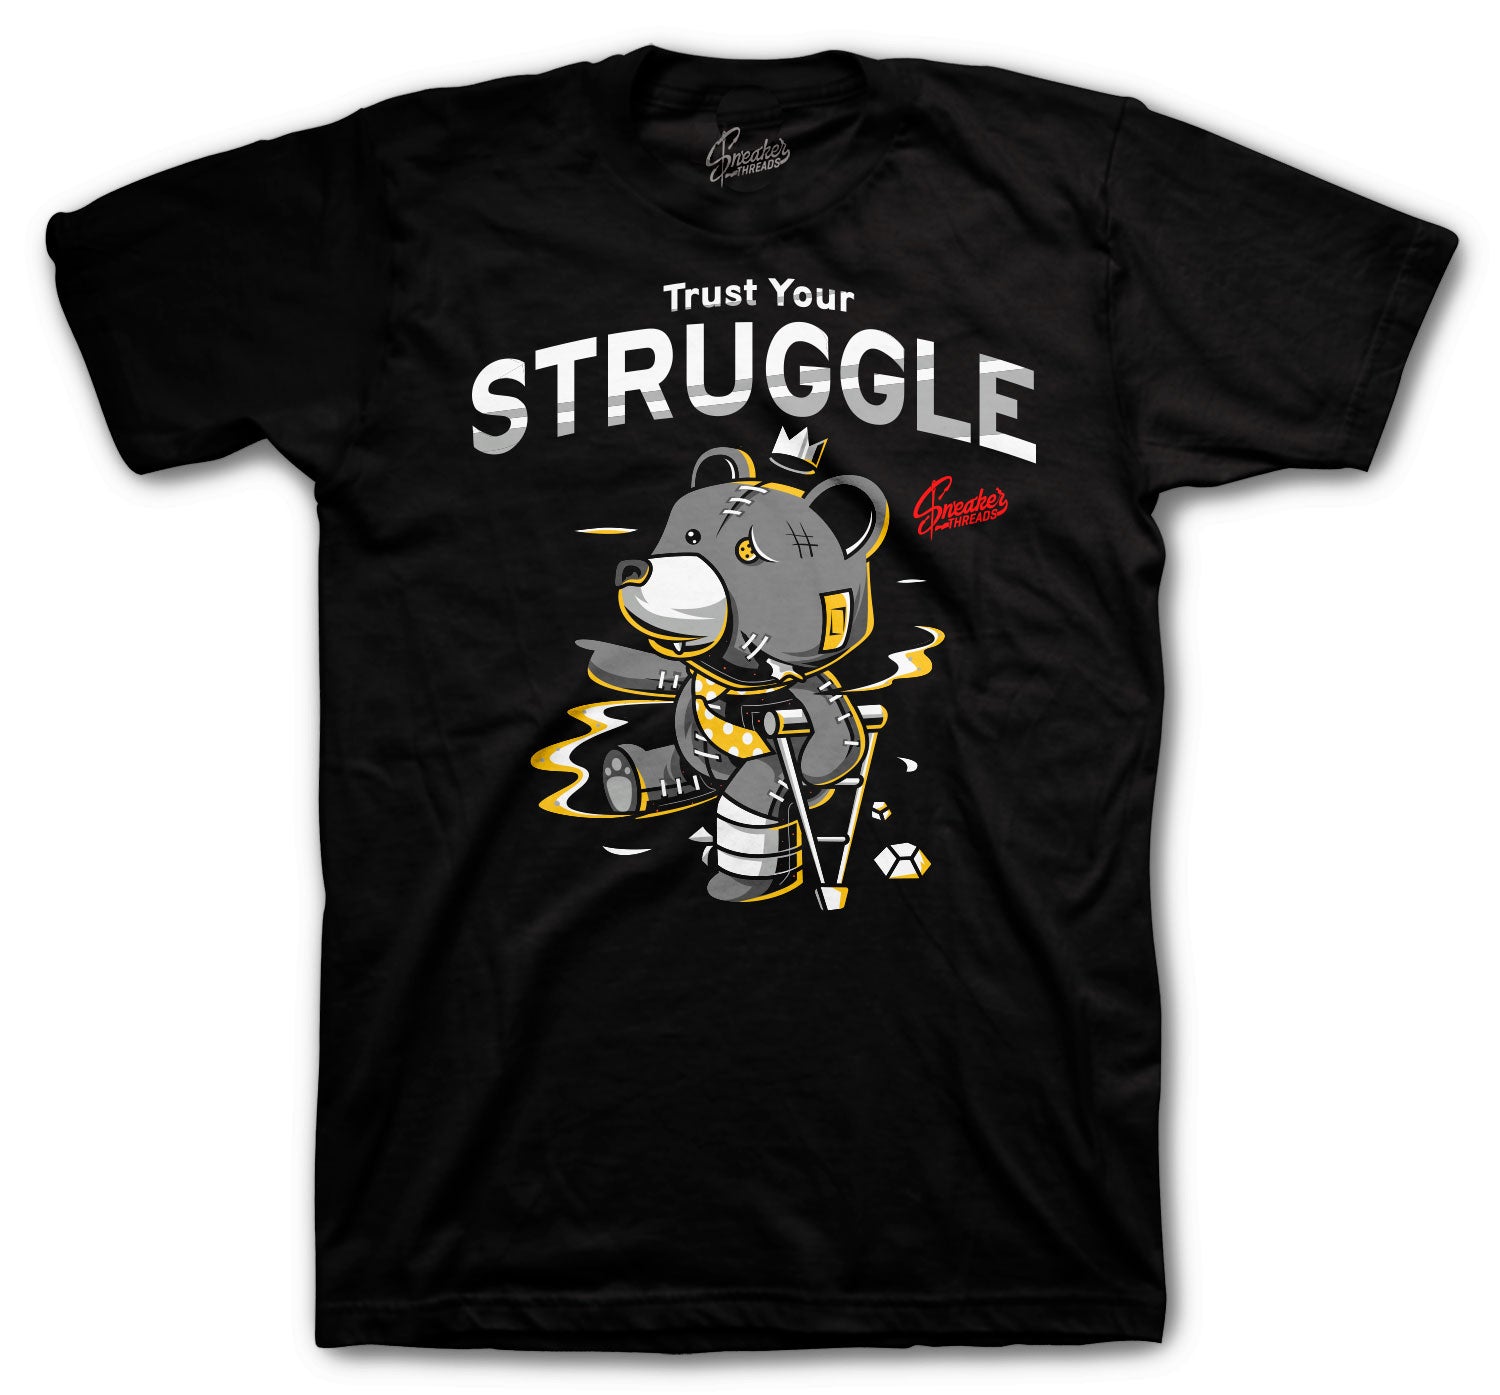 Retro 3 Cool Grey Shirt - Trust Your Struggle - Black